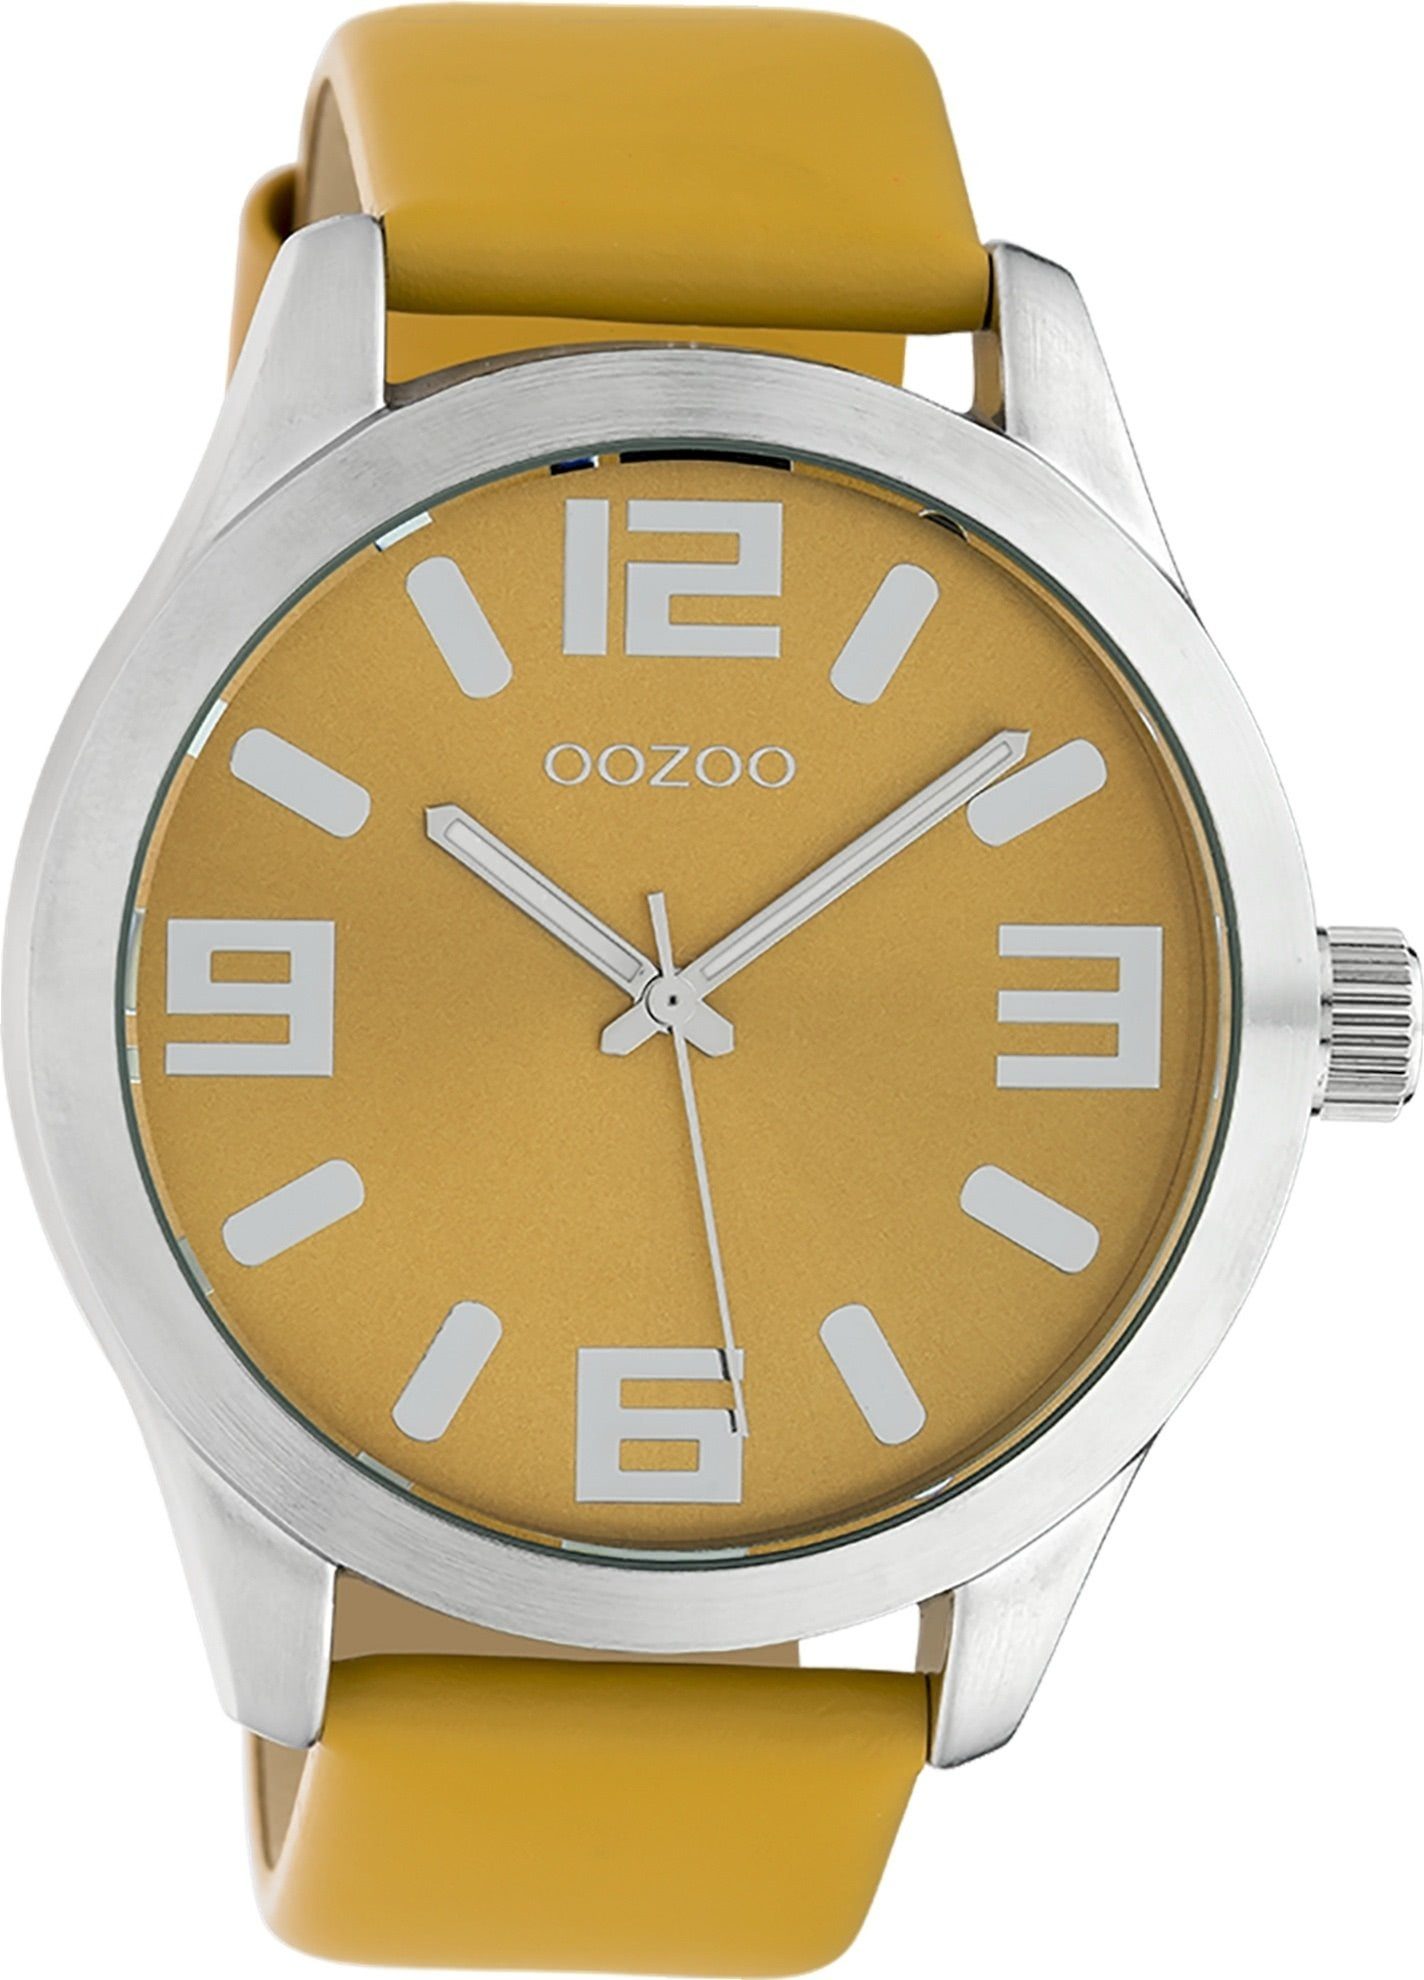 OOZOO Quarzuhr Lederarmband, Oozoo Analog, senfgelb (ca groß Damen, Herrenuhr 46mm) extra rund, Damen FashionStyle Armbanduhr